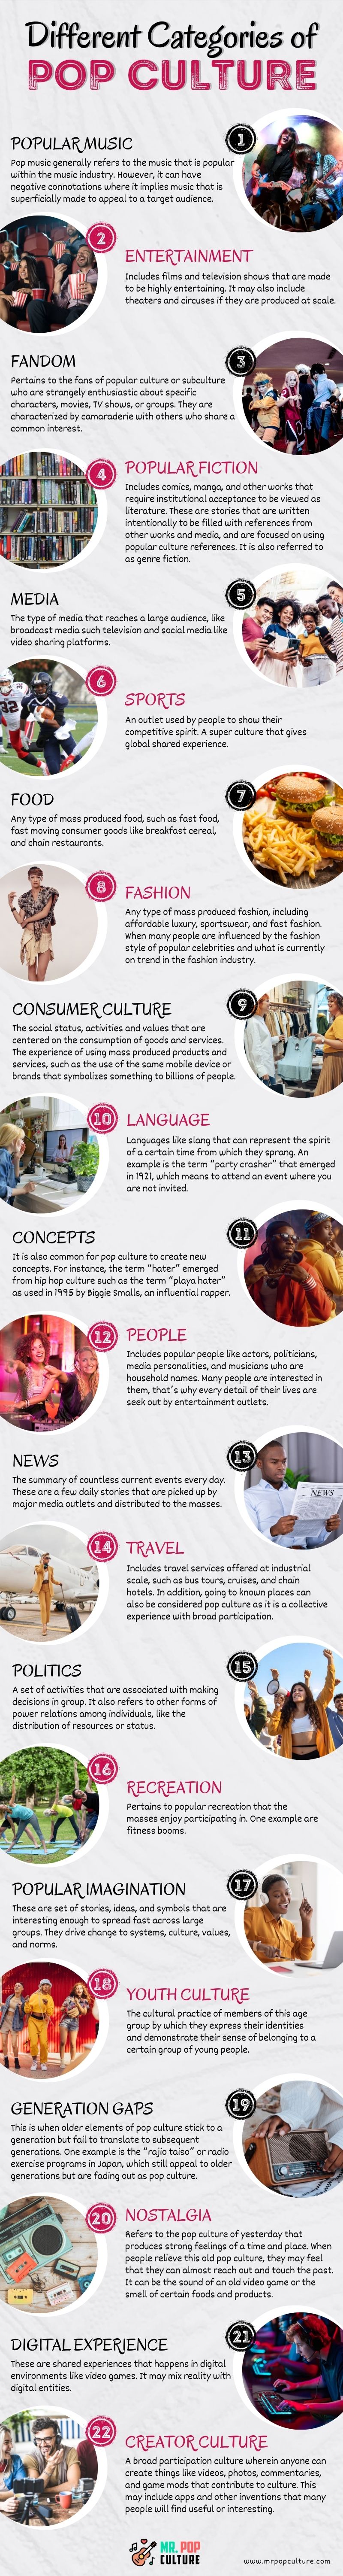 Different Categories of Pop Culture